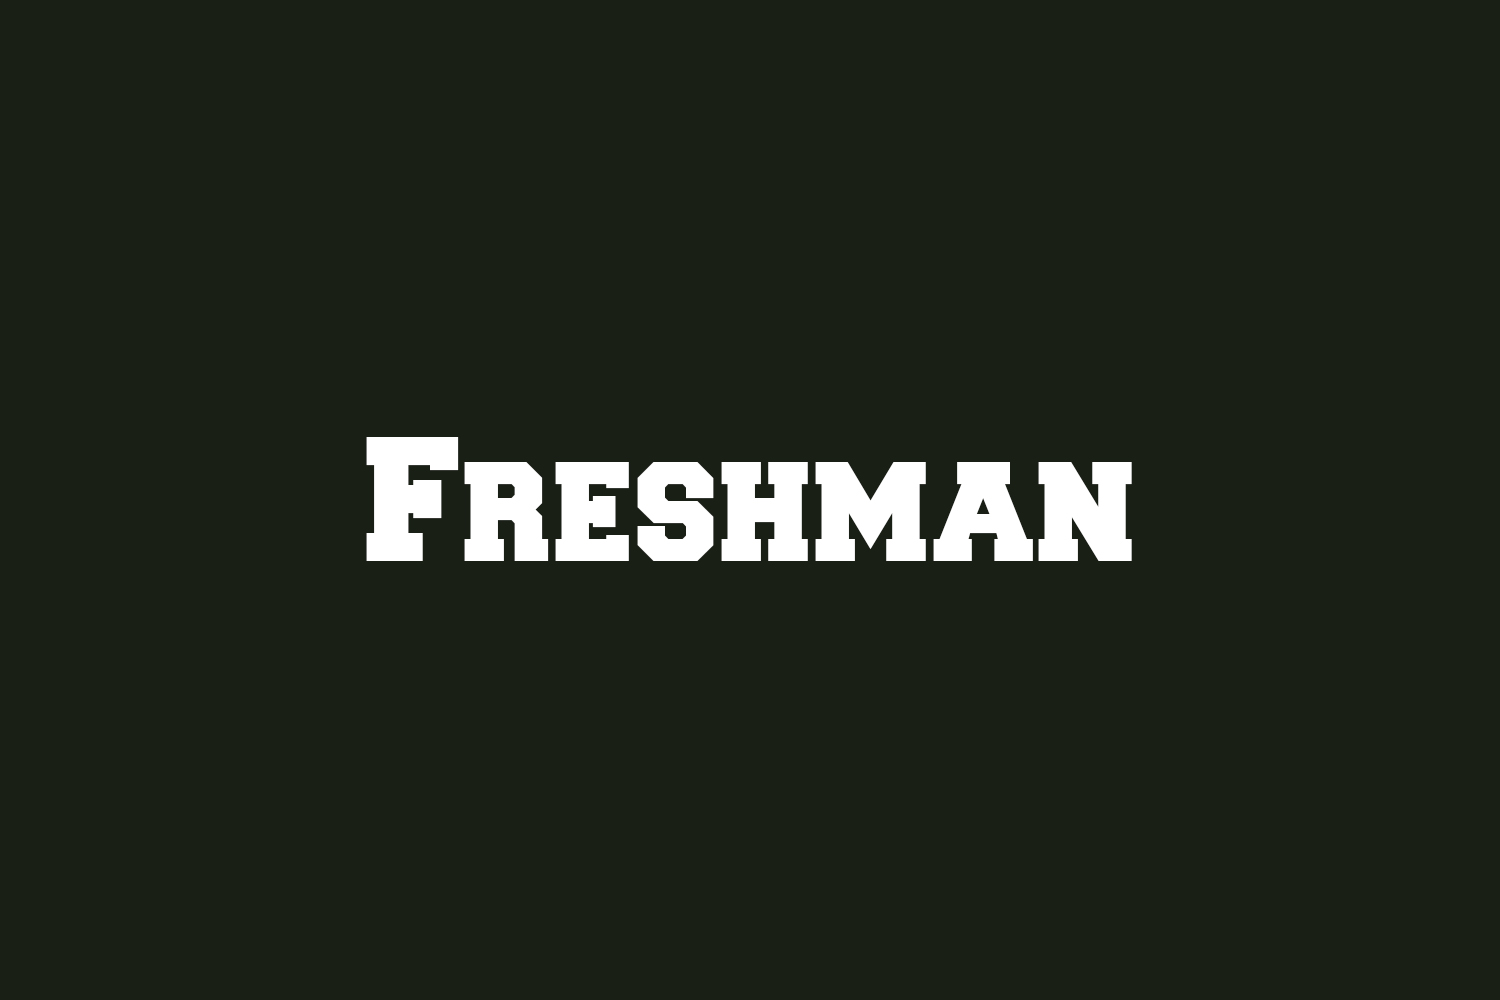 Freshman Font